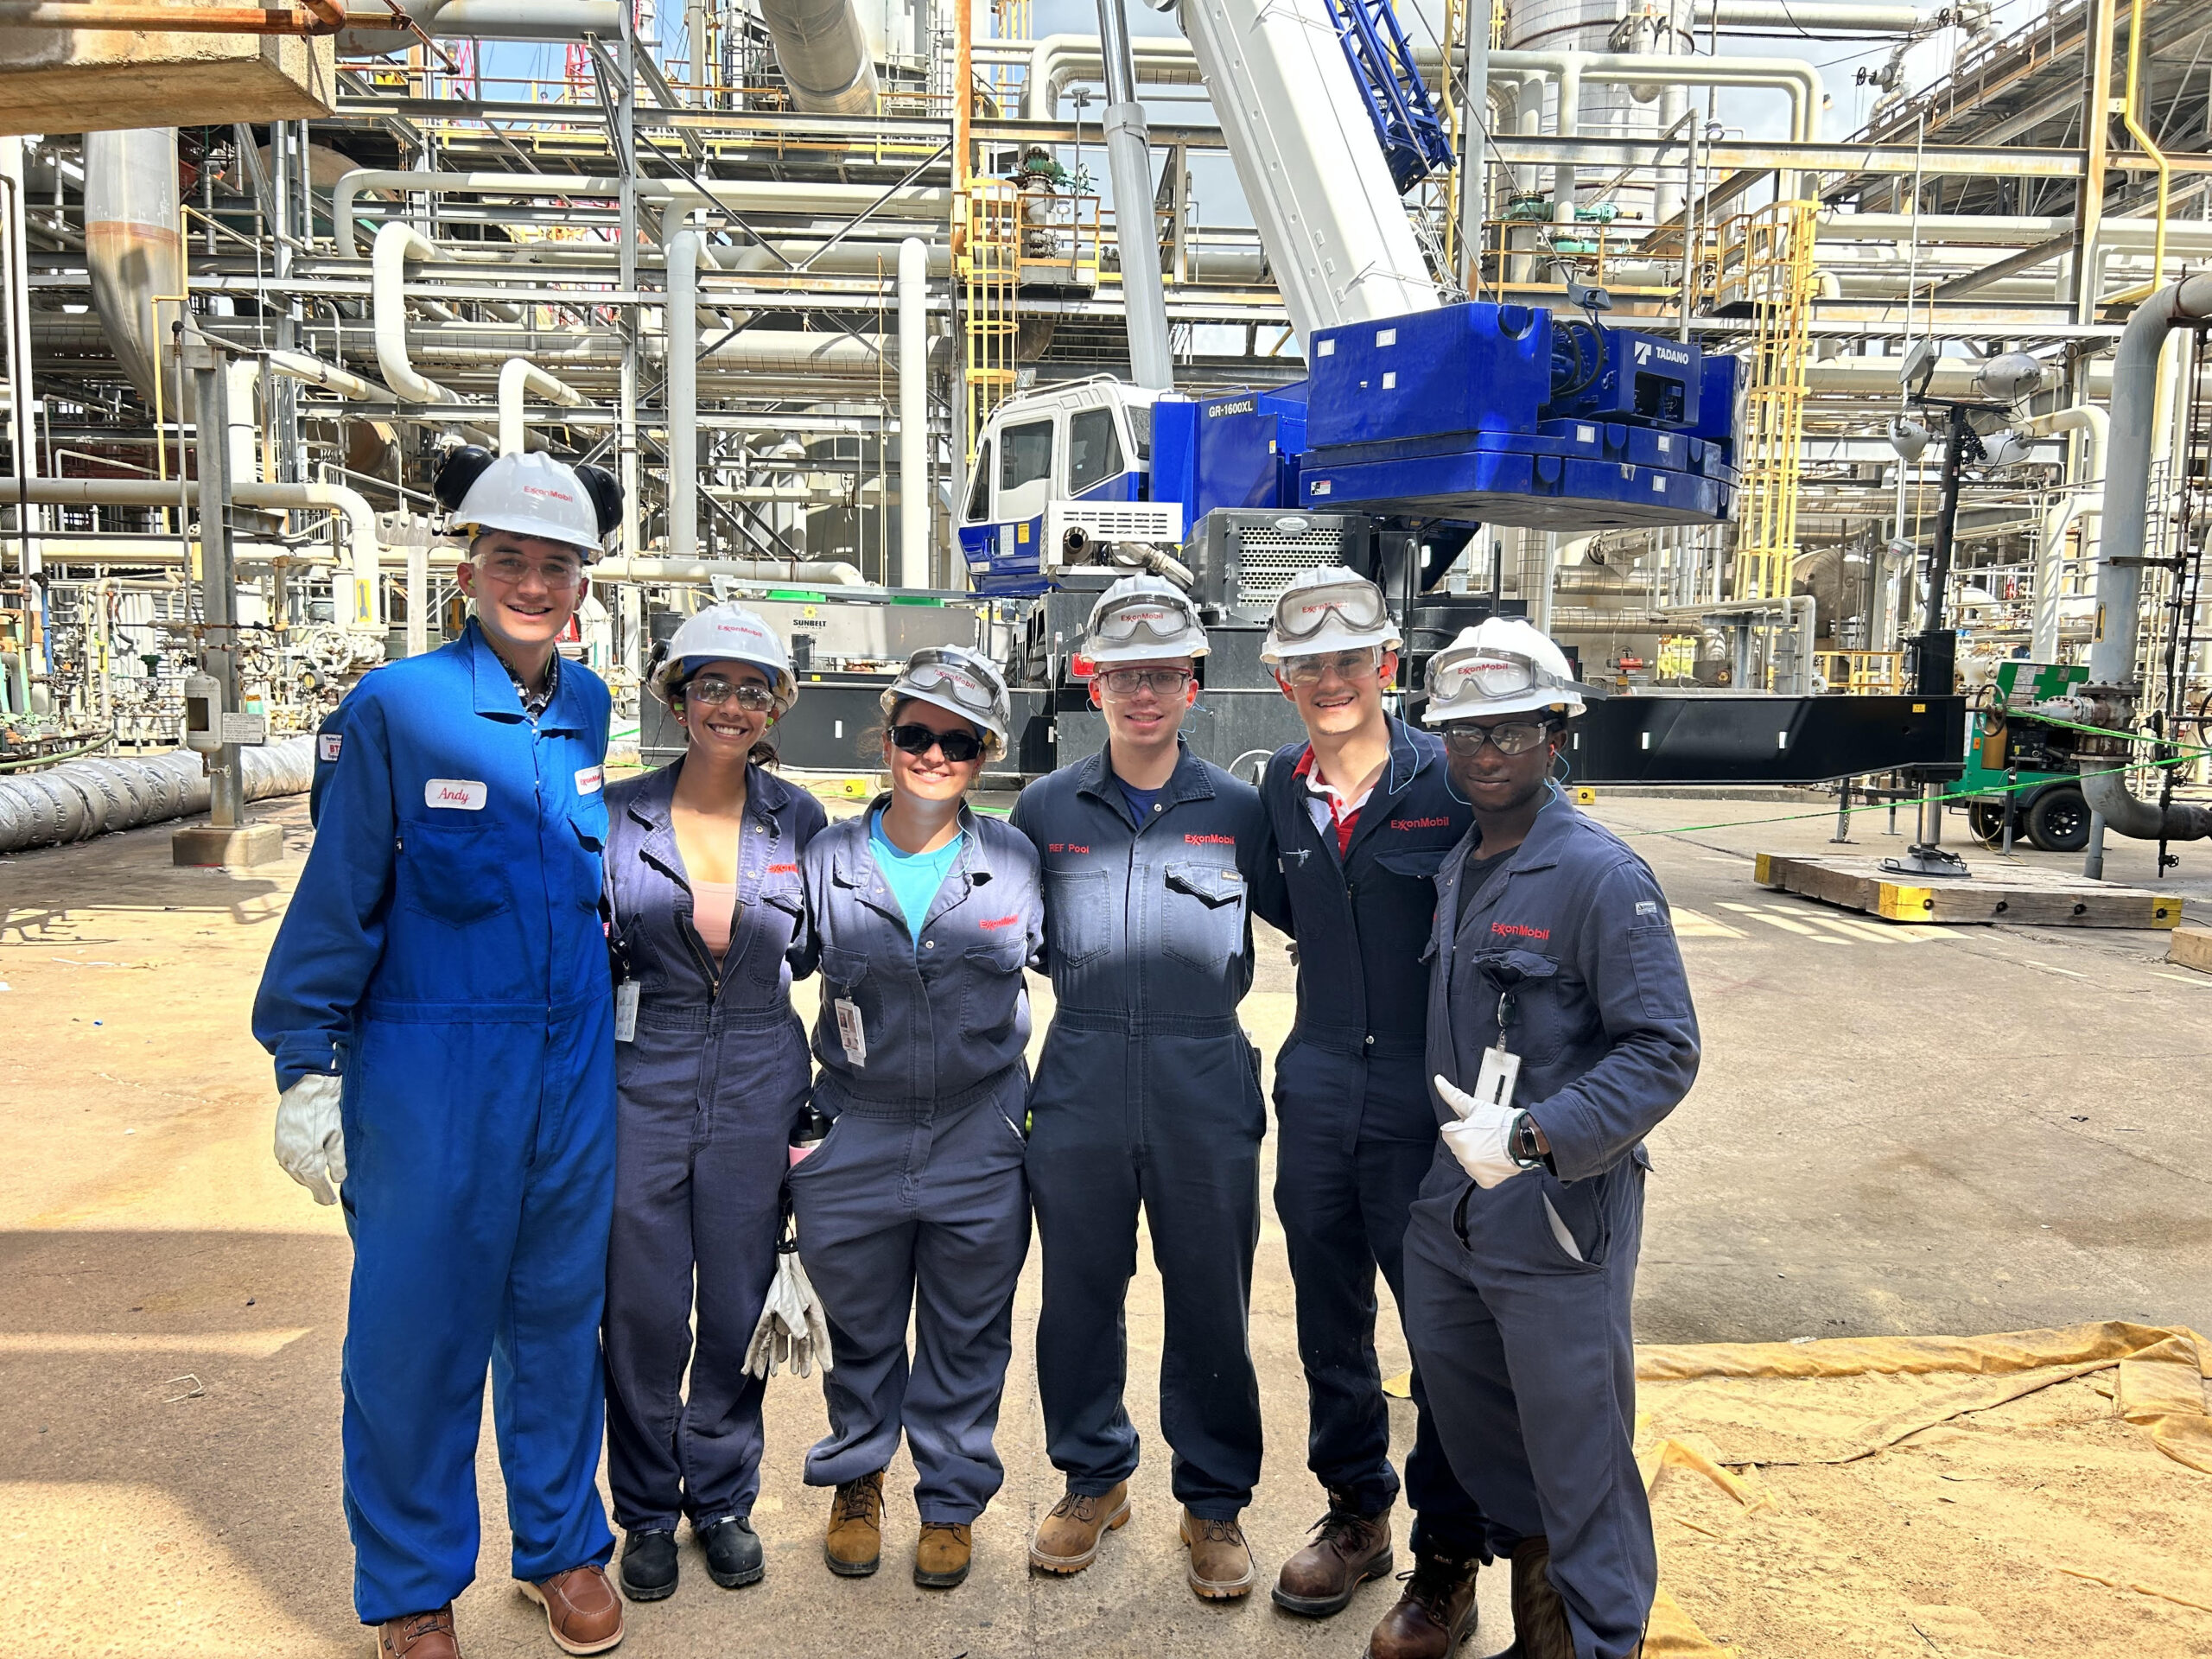 Tyler (far right) at ExxonMobil internship site.